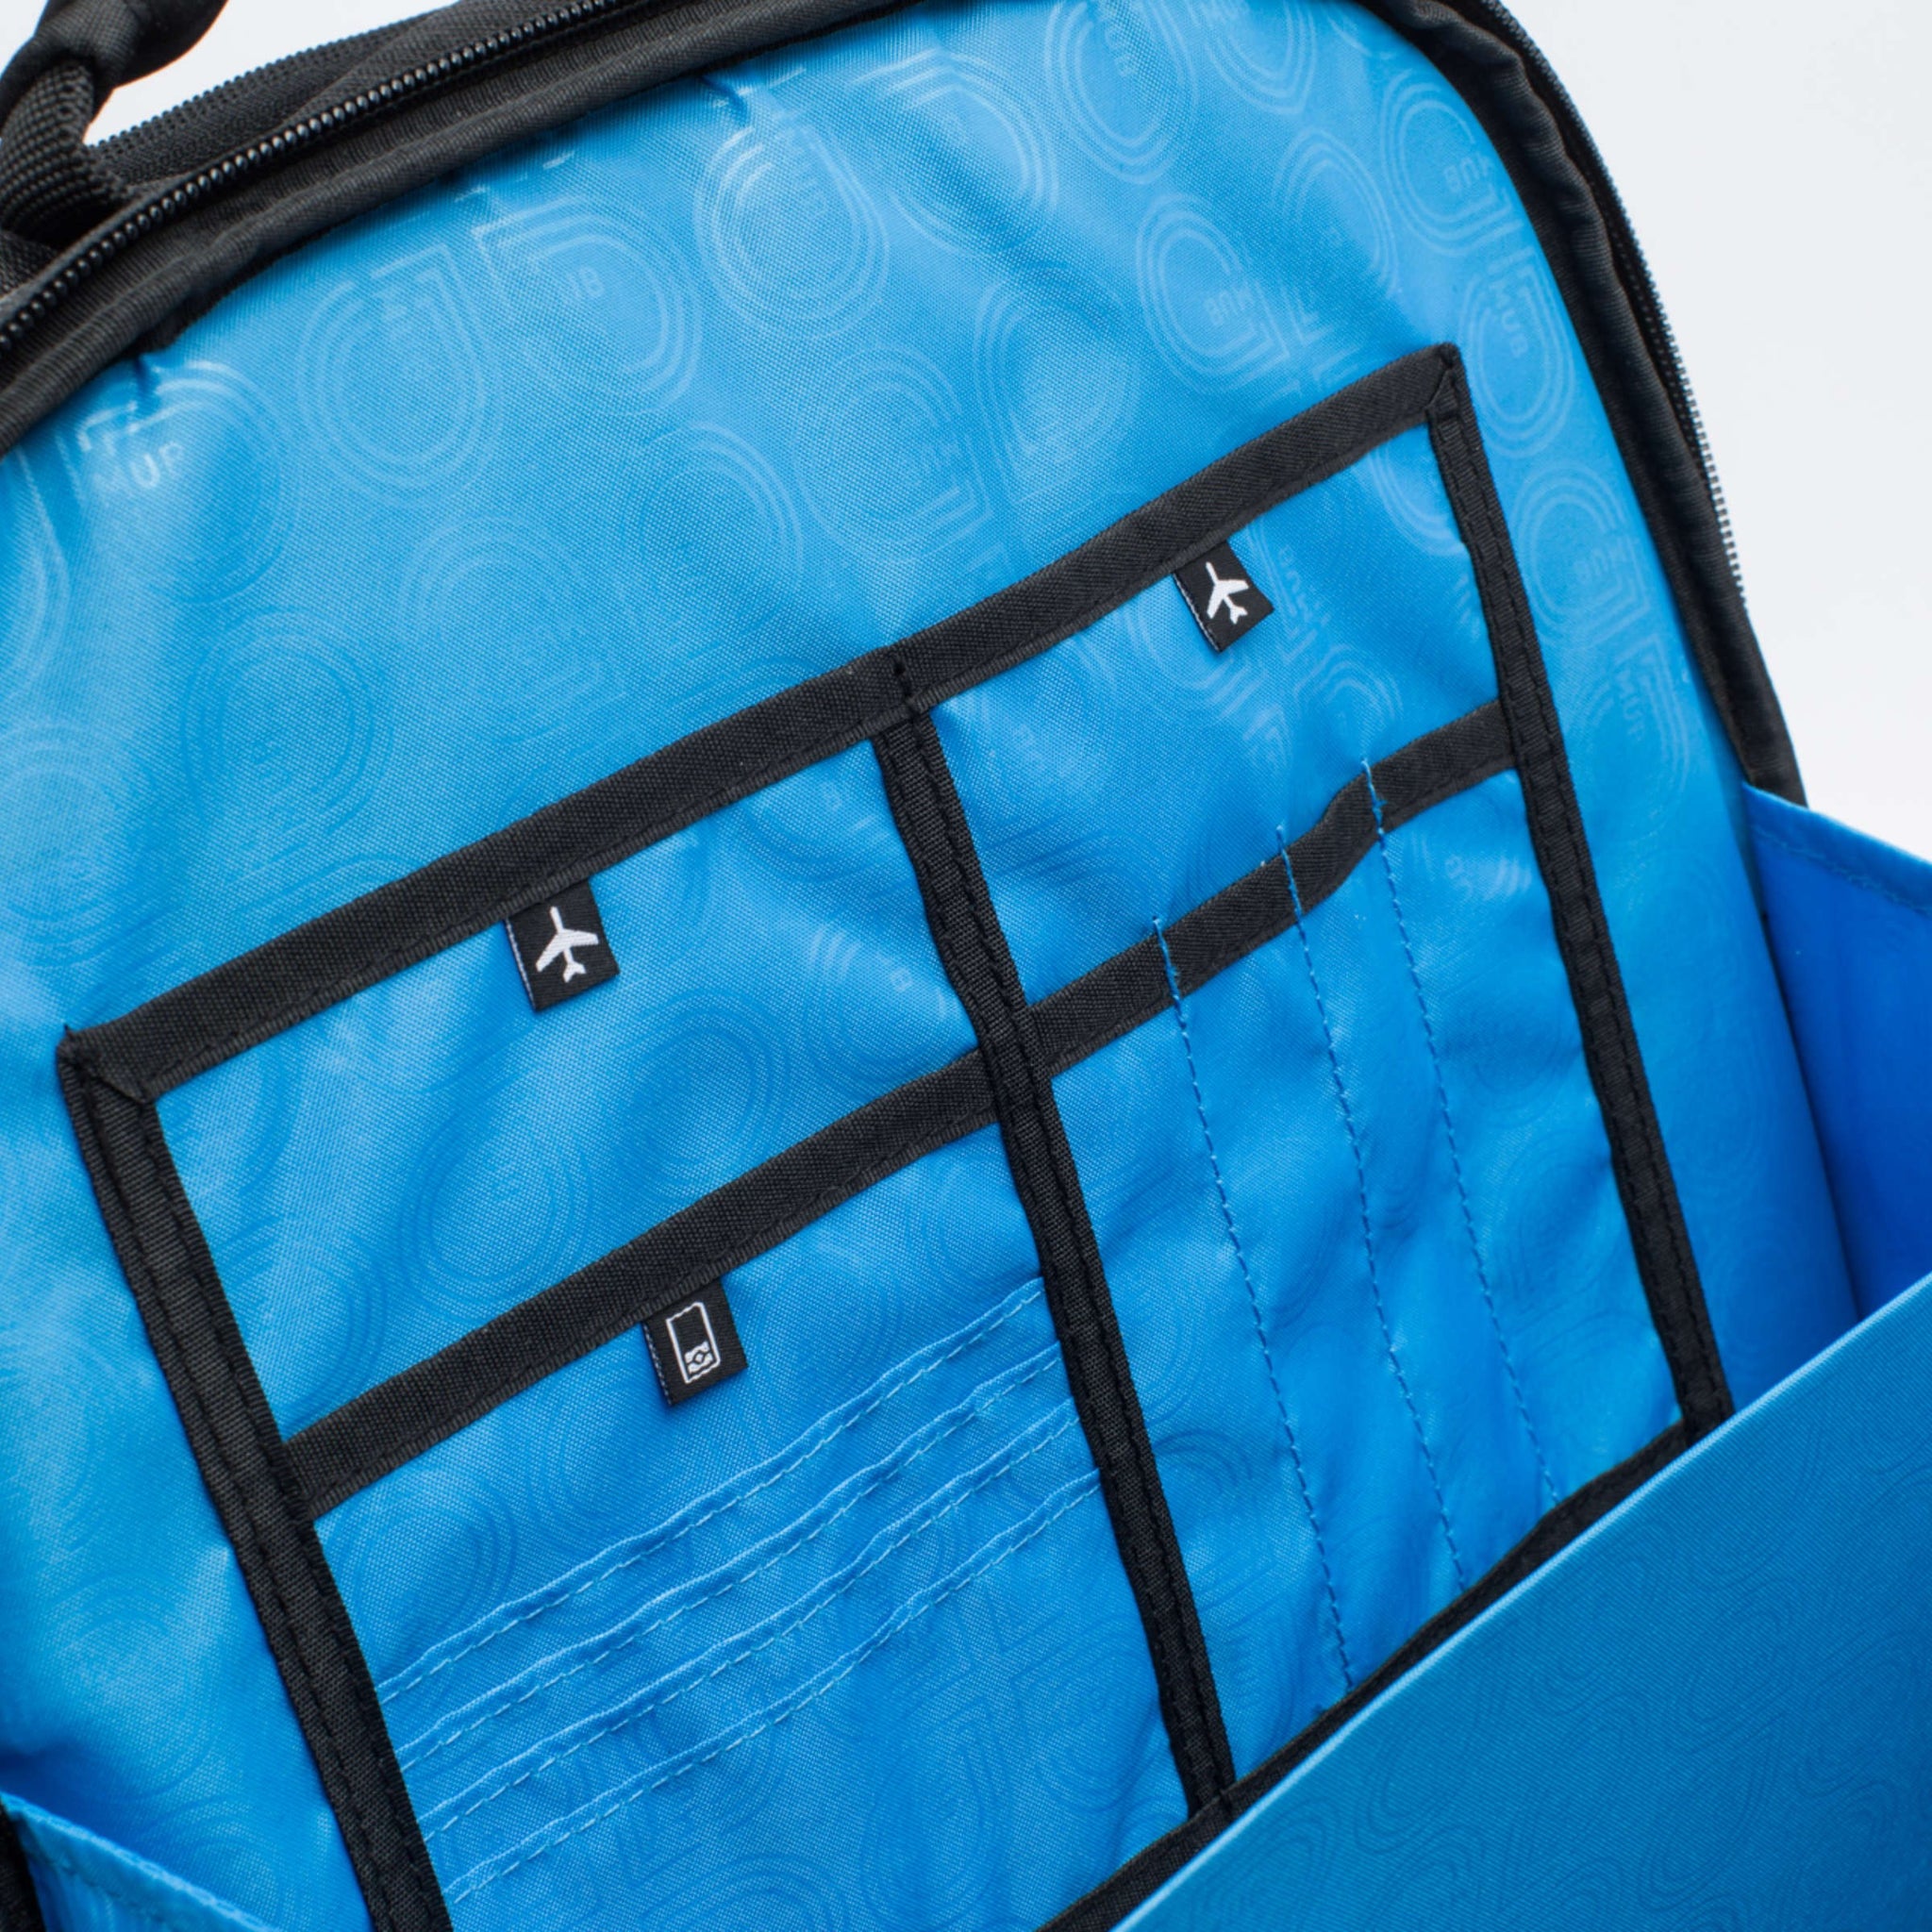 MUB TRAVELER REGULAR Classic Blue - The BiarritzI Deluxe Travel Backpack for Men